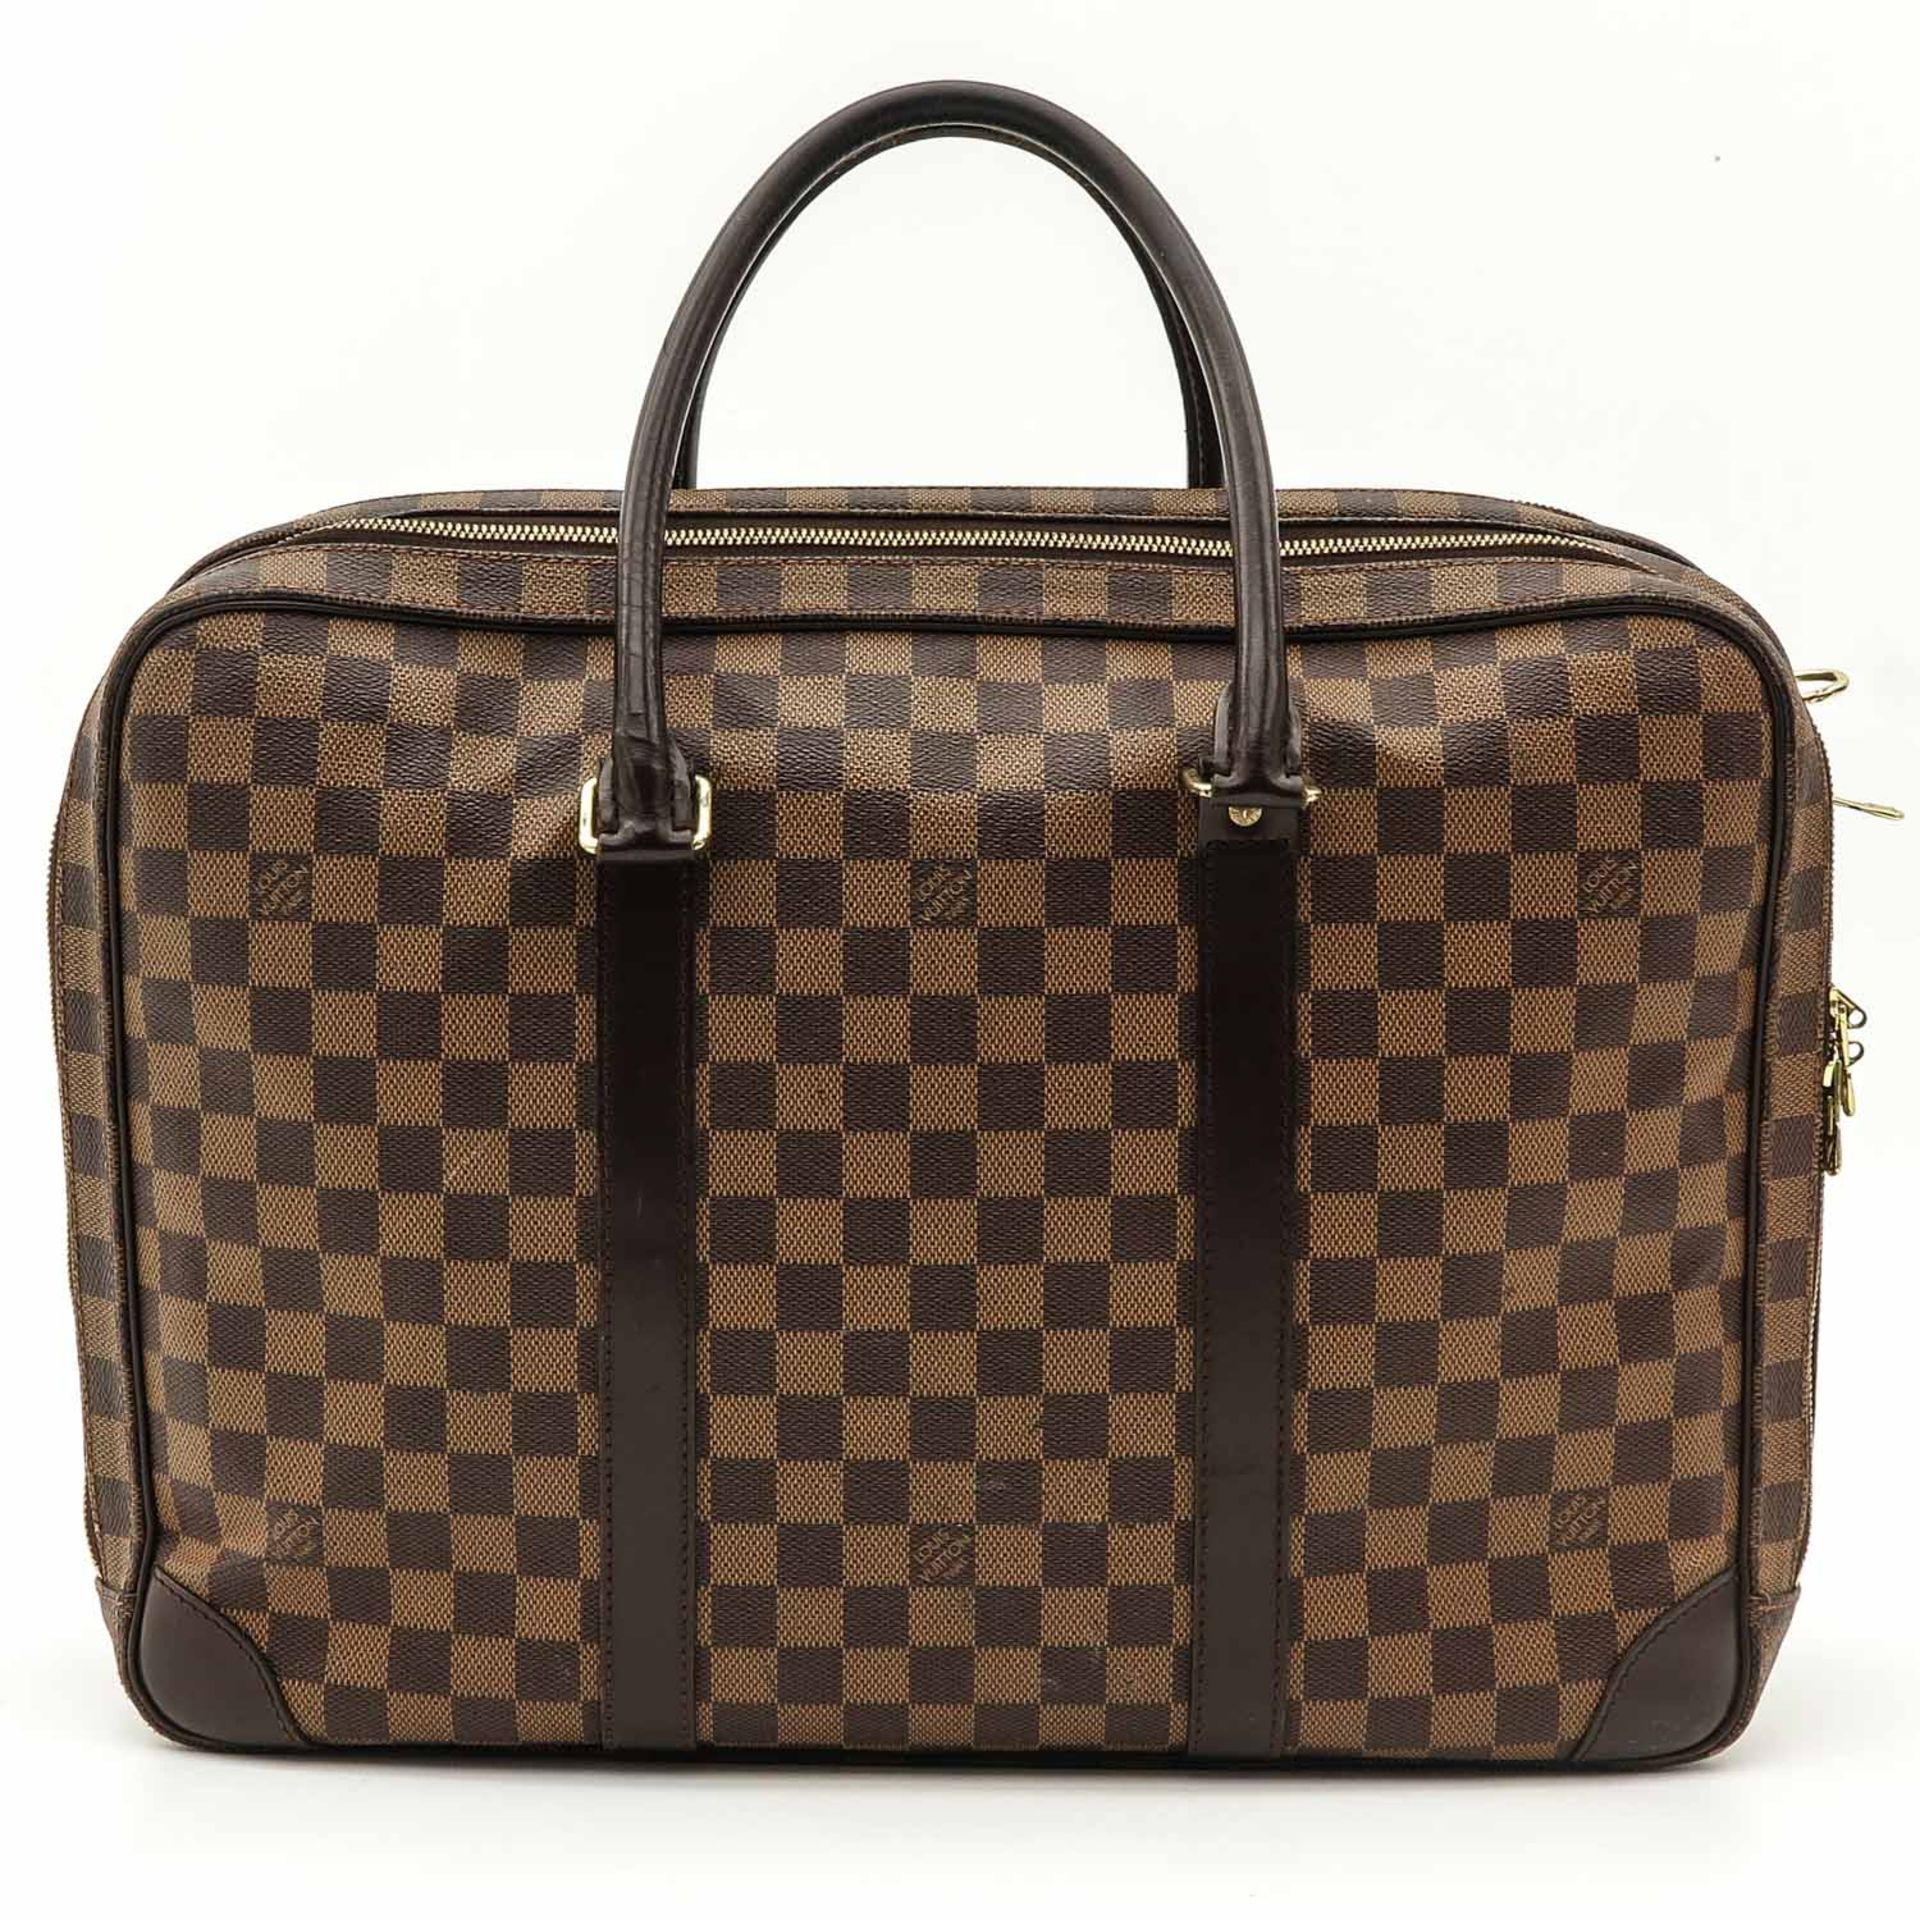 A Custom Made Louis Vuitton Travel Bag - Image 3 of 8